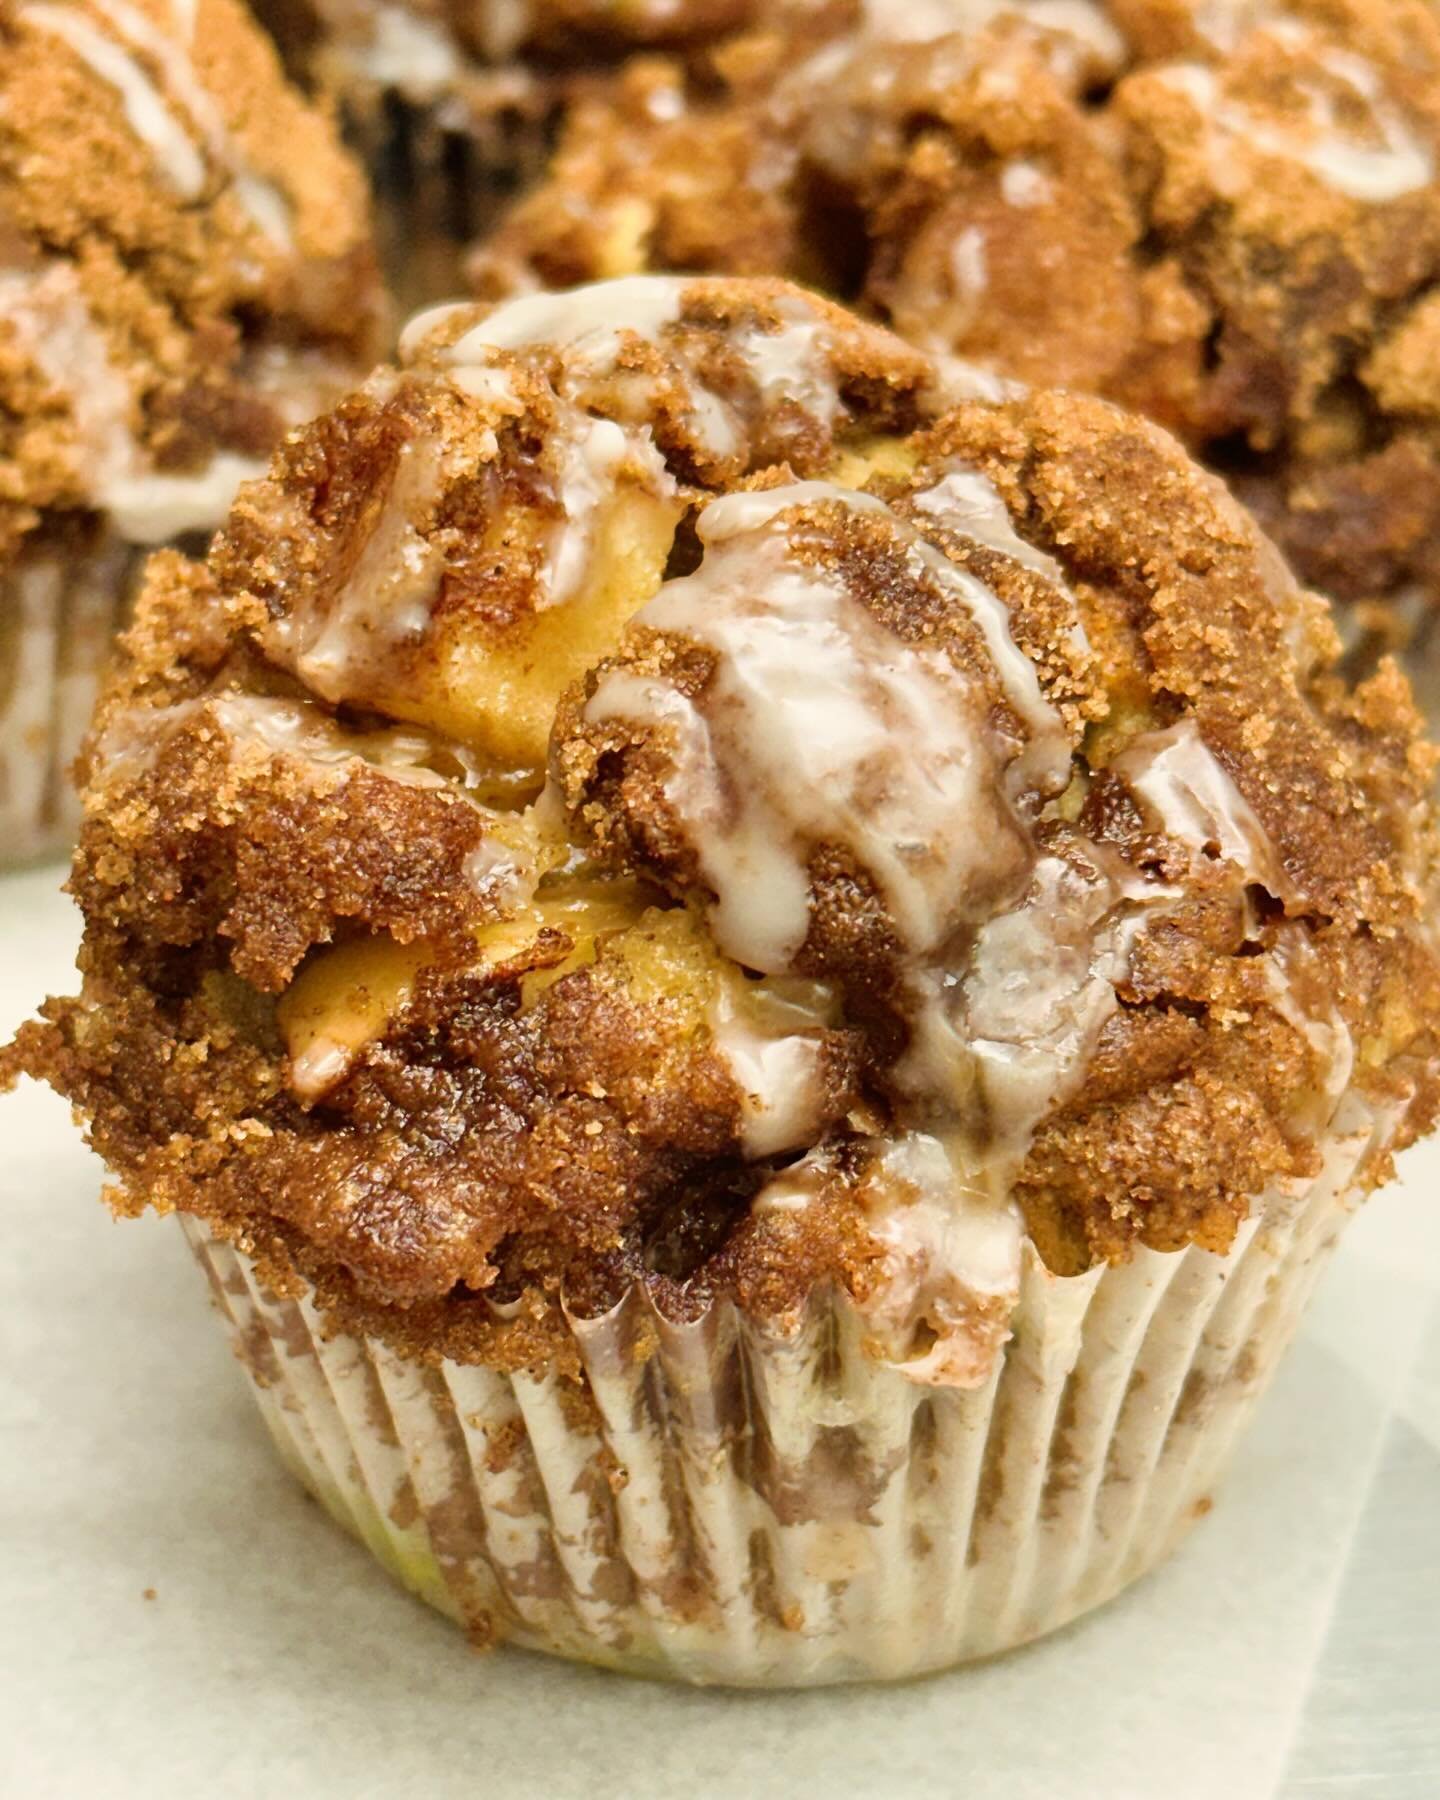 Muffin mash-up! Juicy Apple Cake Muffin with Cinnamon CoffeeCake Topping. You are going to LOVE this one. ❤️ 
#freshbakedgoodies #itsrainingagain #selfsoothersaf #cinnamonisanaphrodisiac #juicyapplesconfections #happyluncheonette #breakfastatluncheon